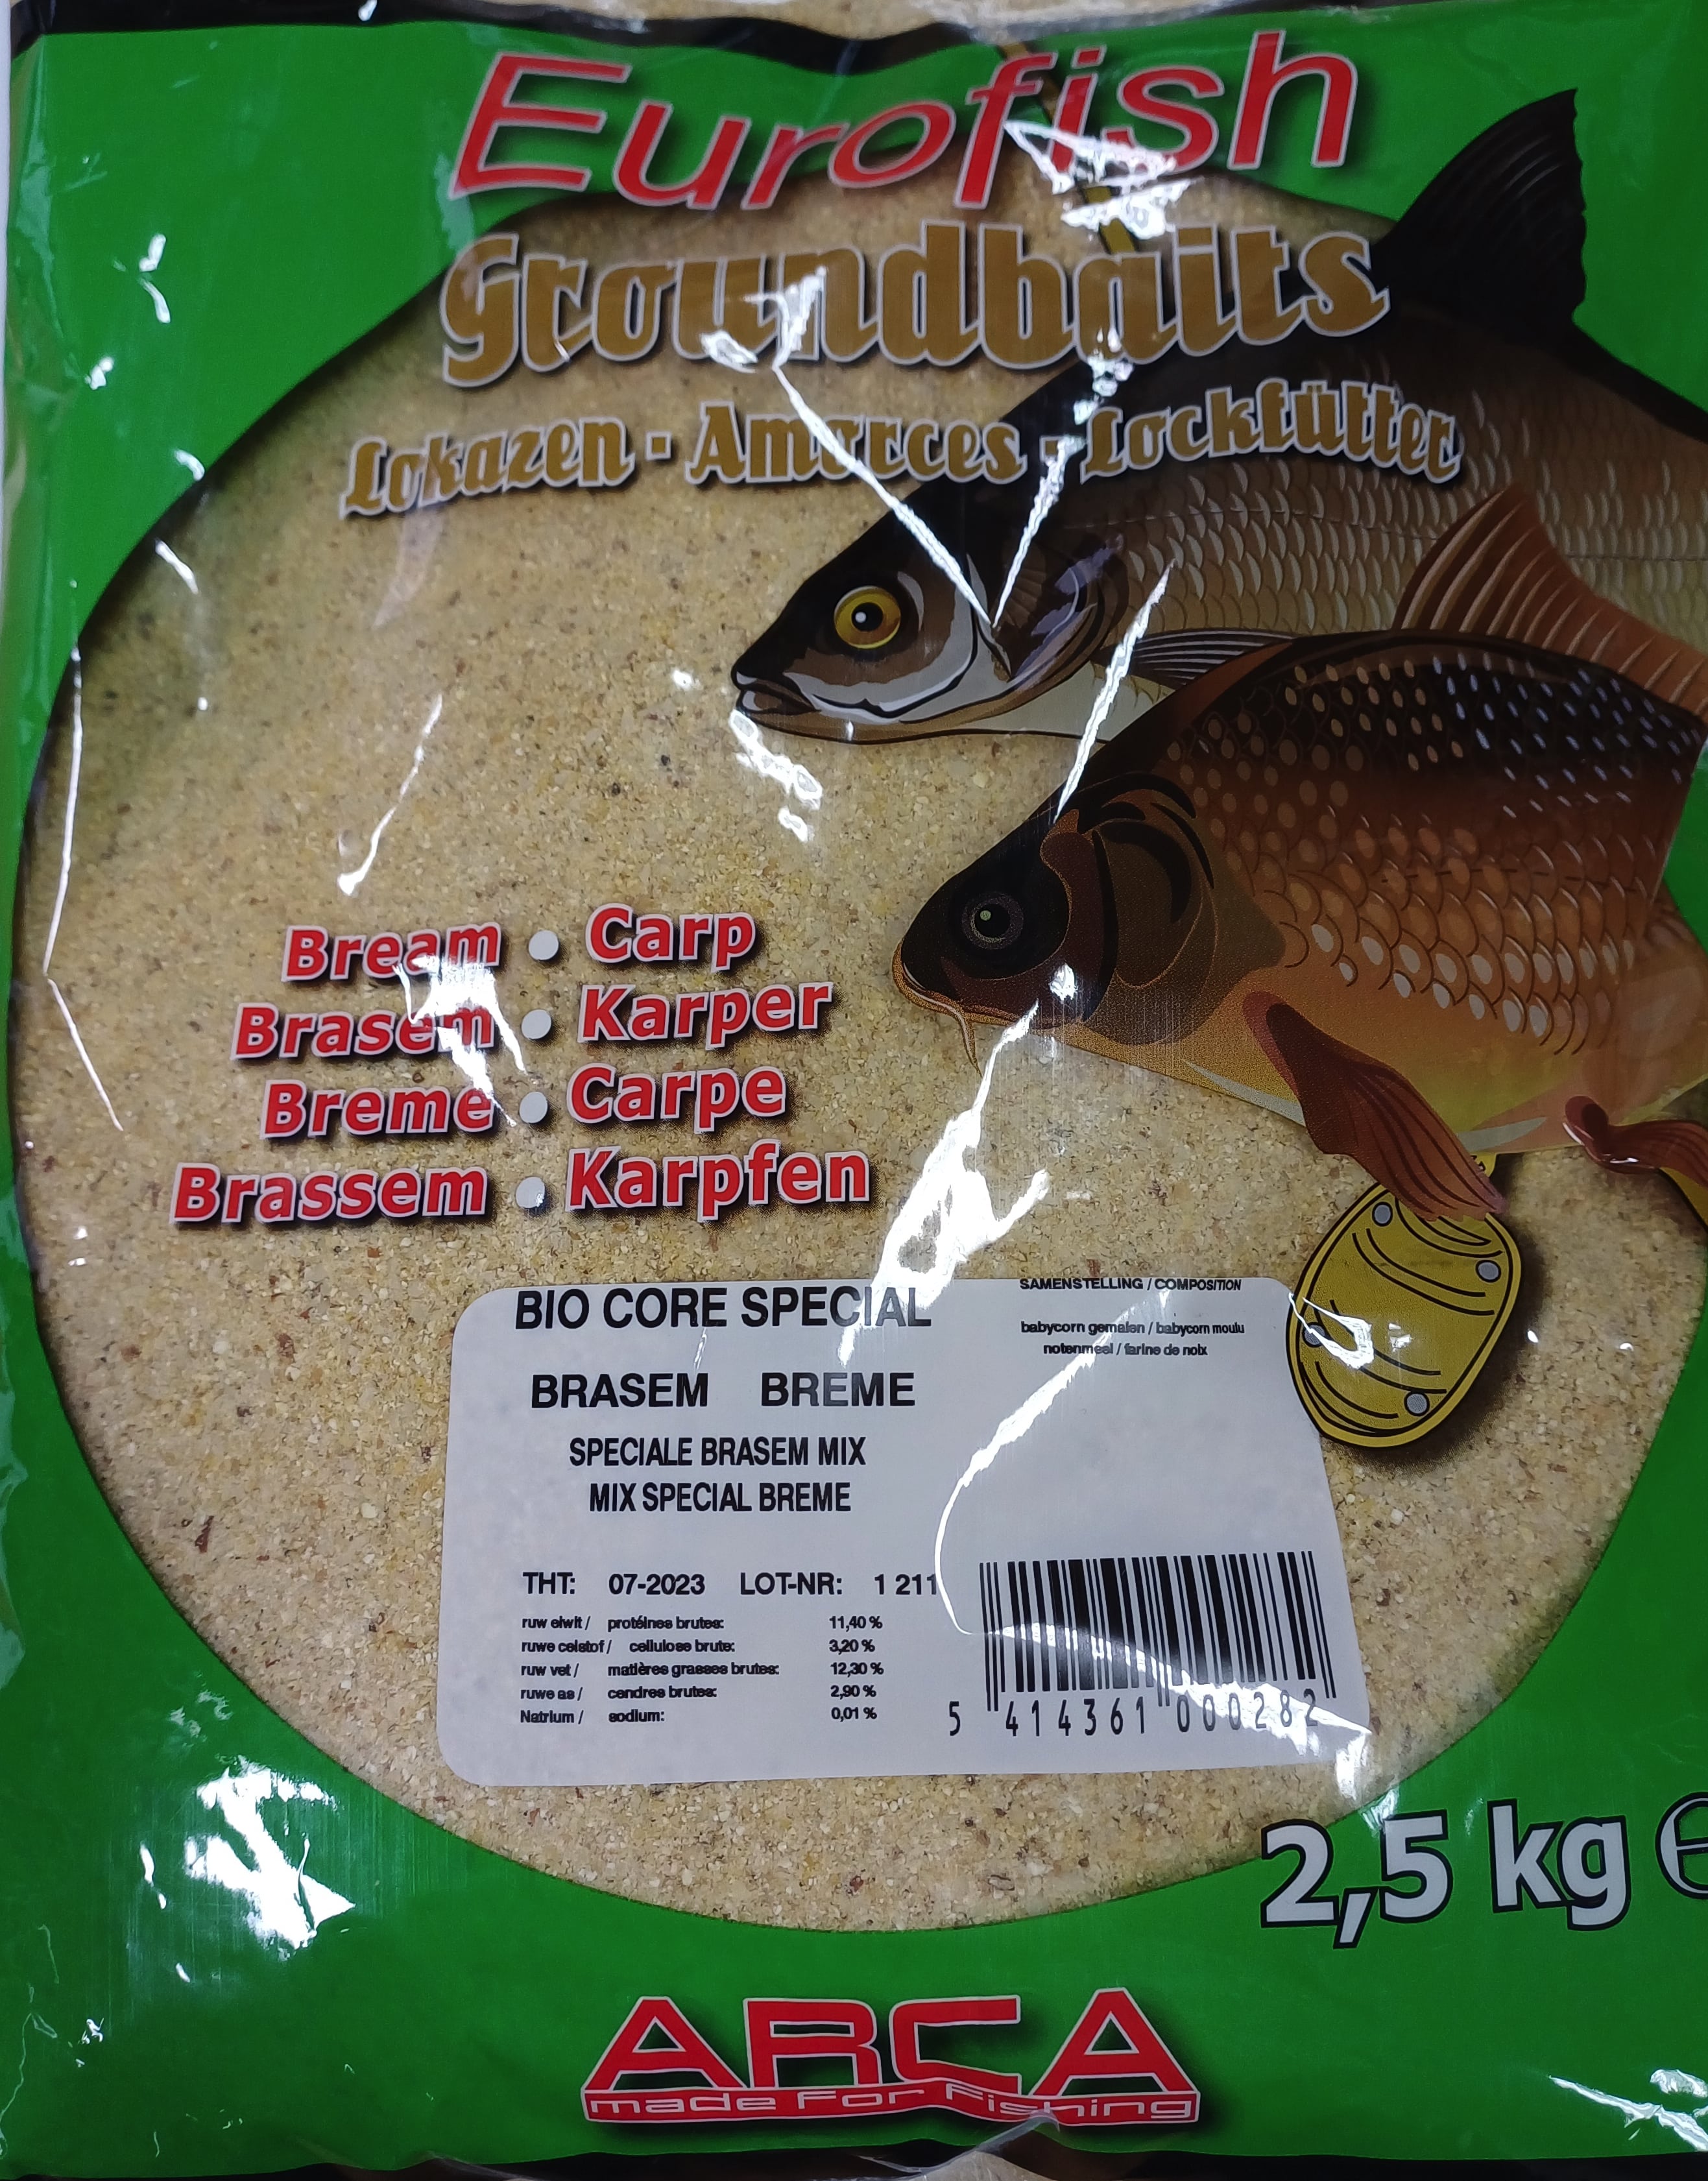 Eurofish bio core special 2.5kg